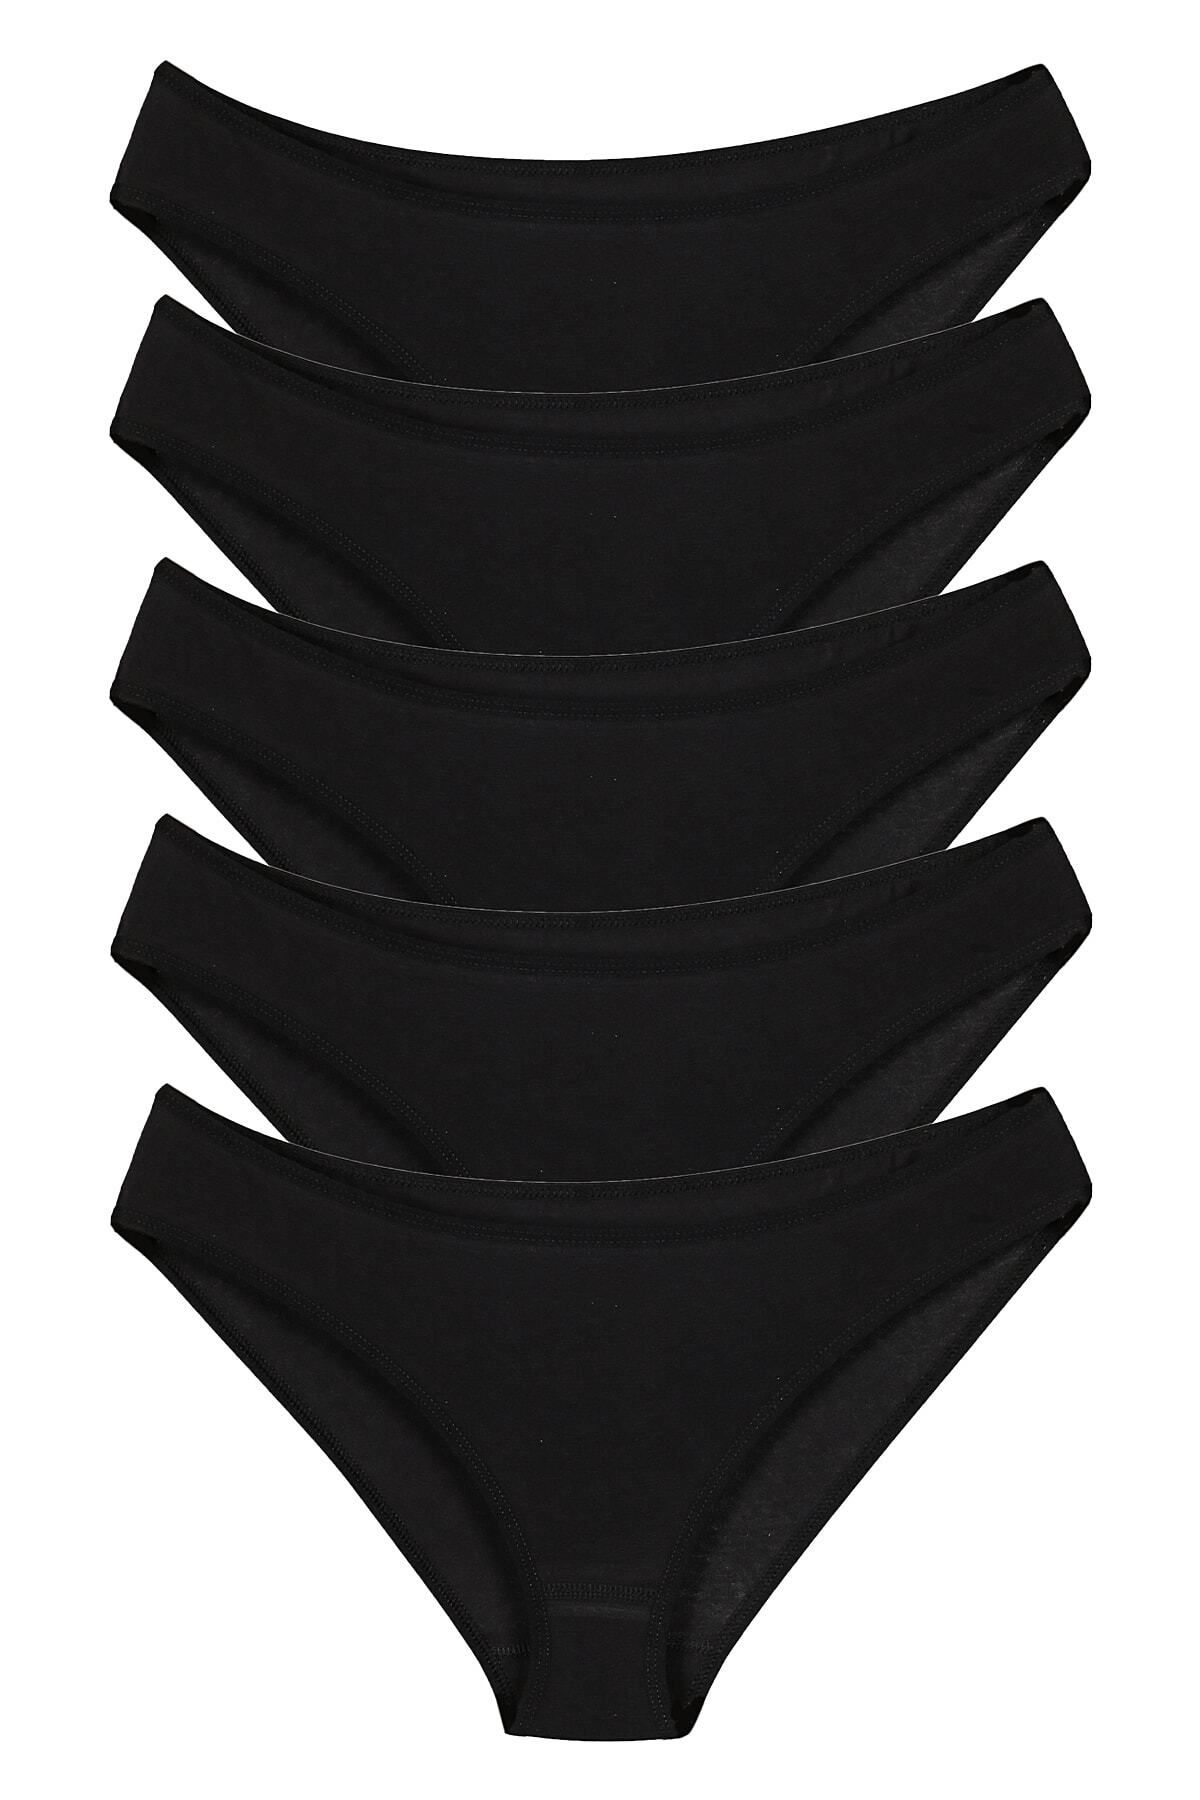 Sensu Kadın - Günlük Pamuklu Külot Siyah Bikini Model 5li Paket Kts1057